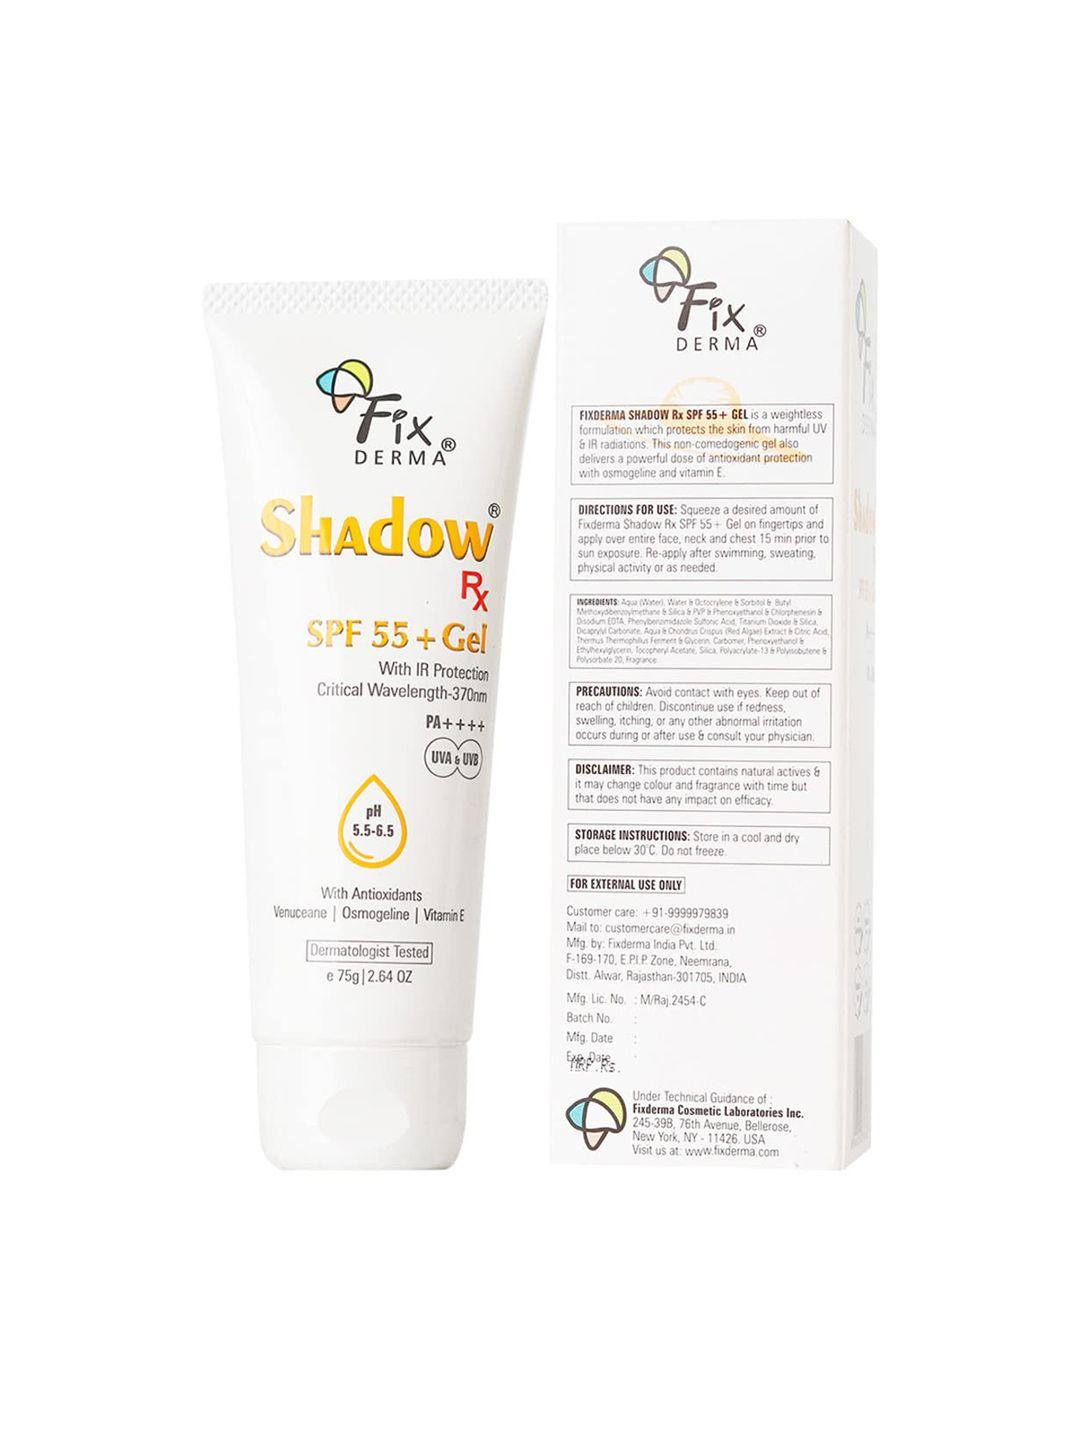 fixderma shadow rx spf55+ gel sunscreen with vitamin e - 75 g